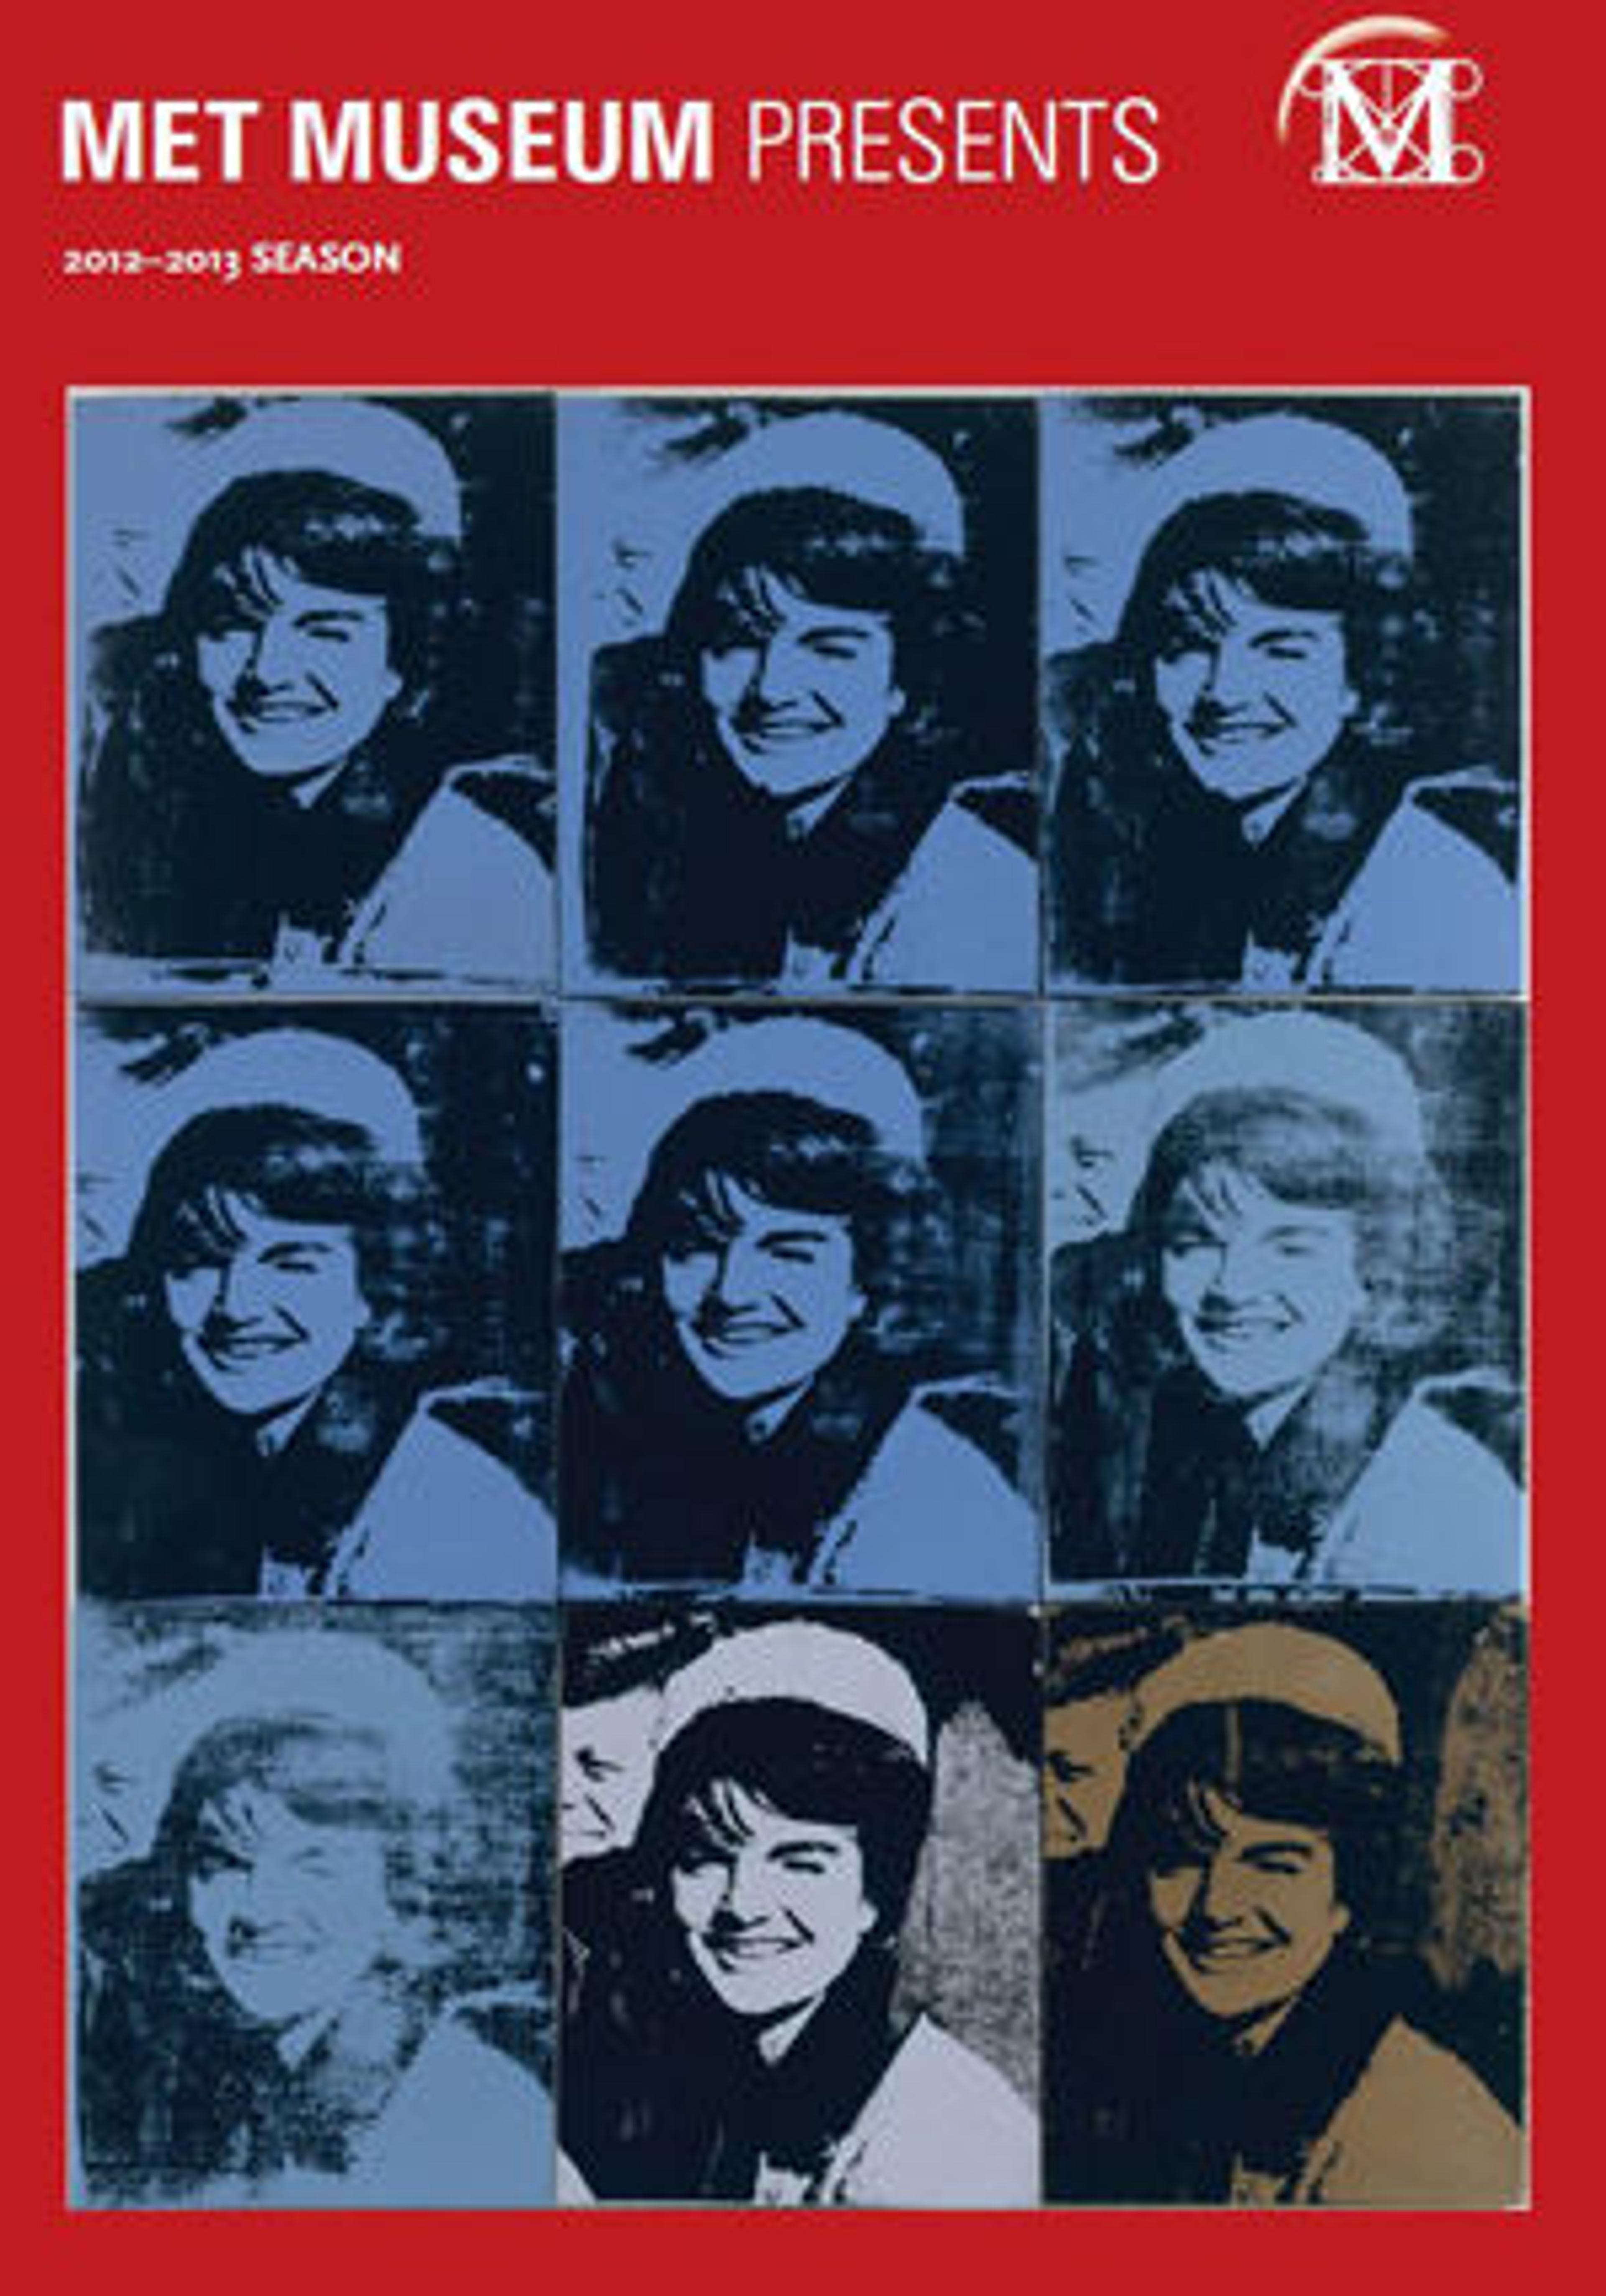 Left: Brochure cover for the inaugural season of Met Museum Presents programming, featuring Andy Warhol's Nine Jackies